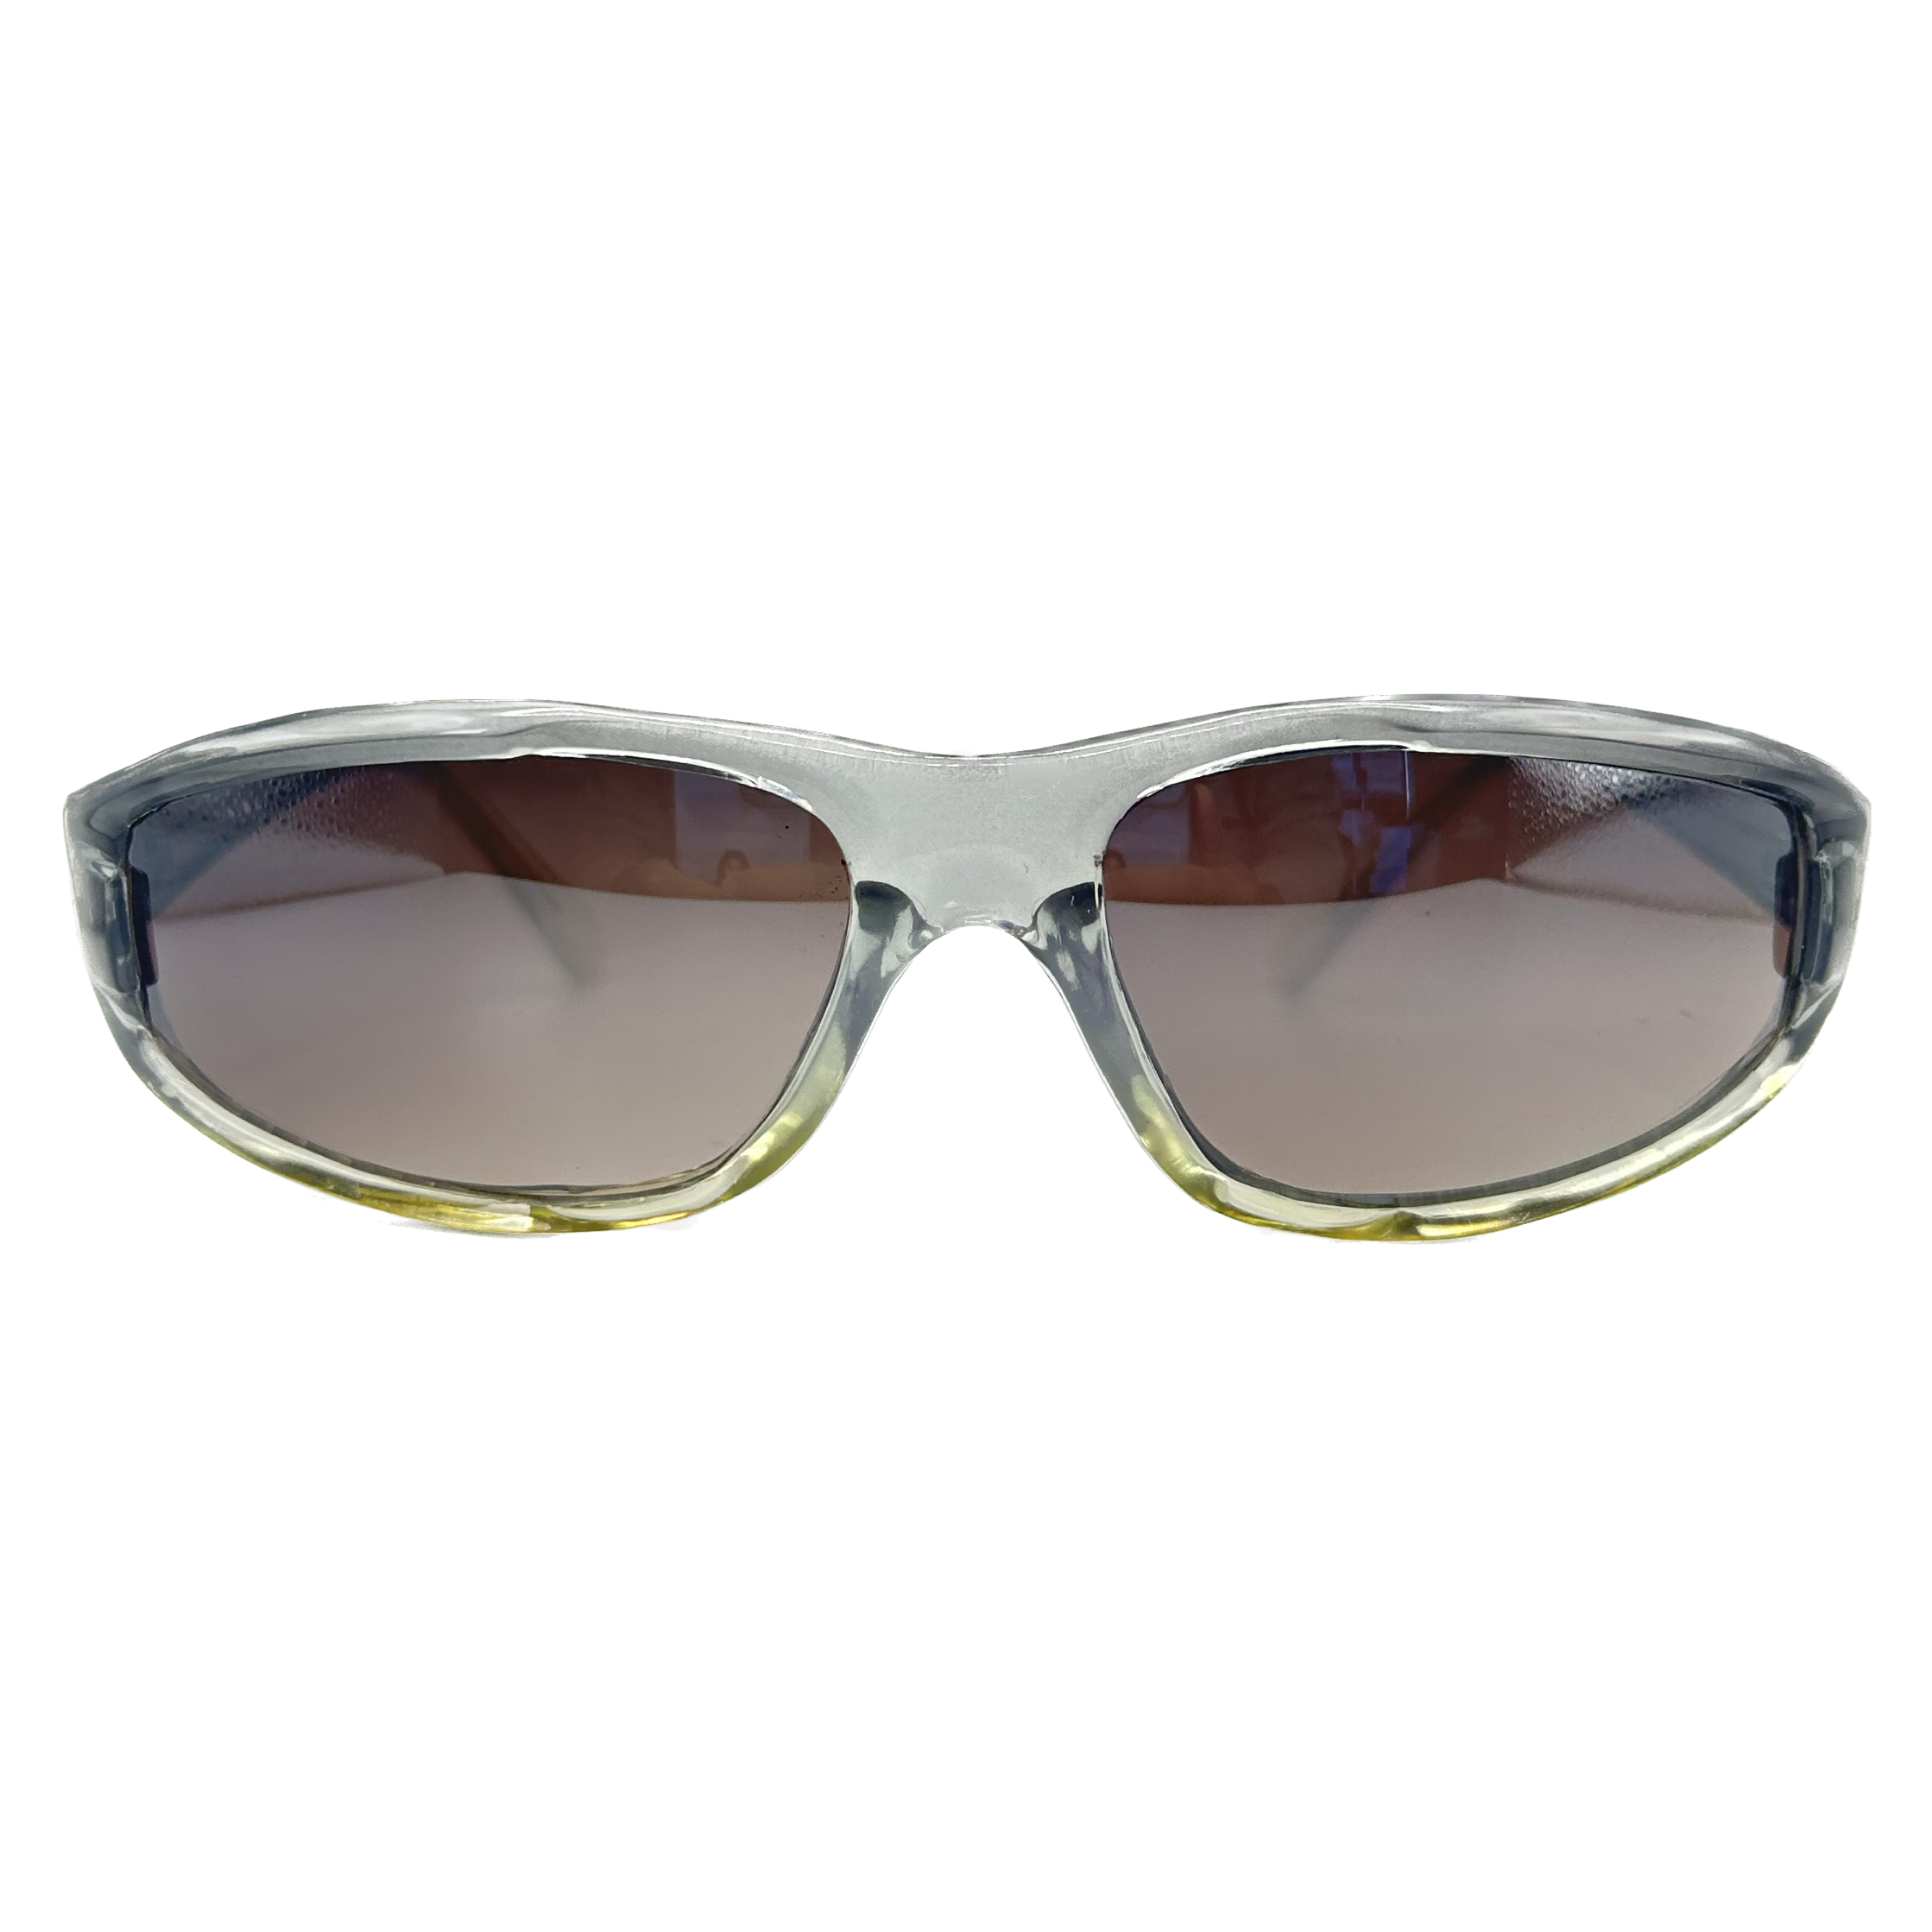 90s sunglasses with a sporty wraparound frame